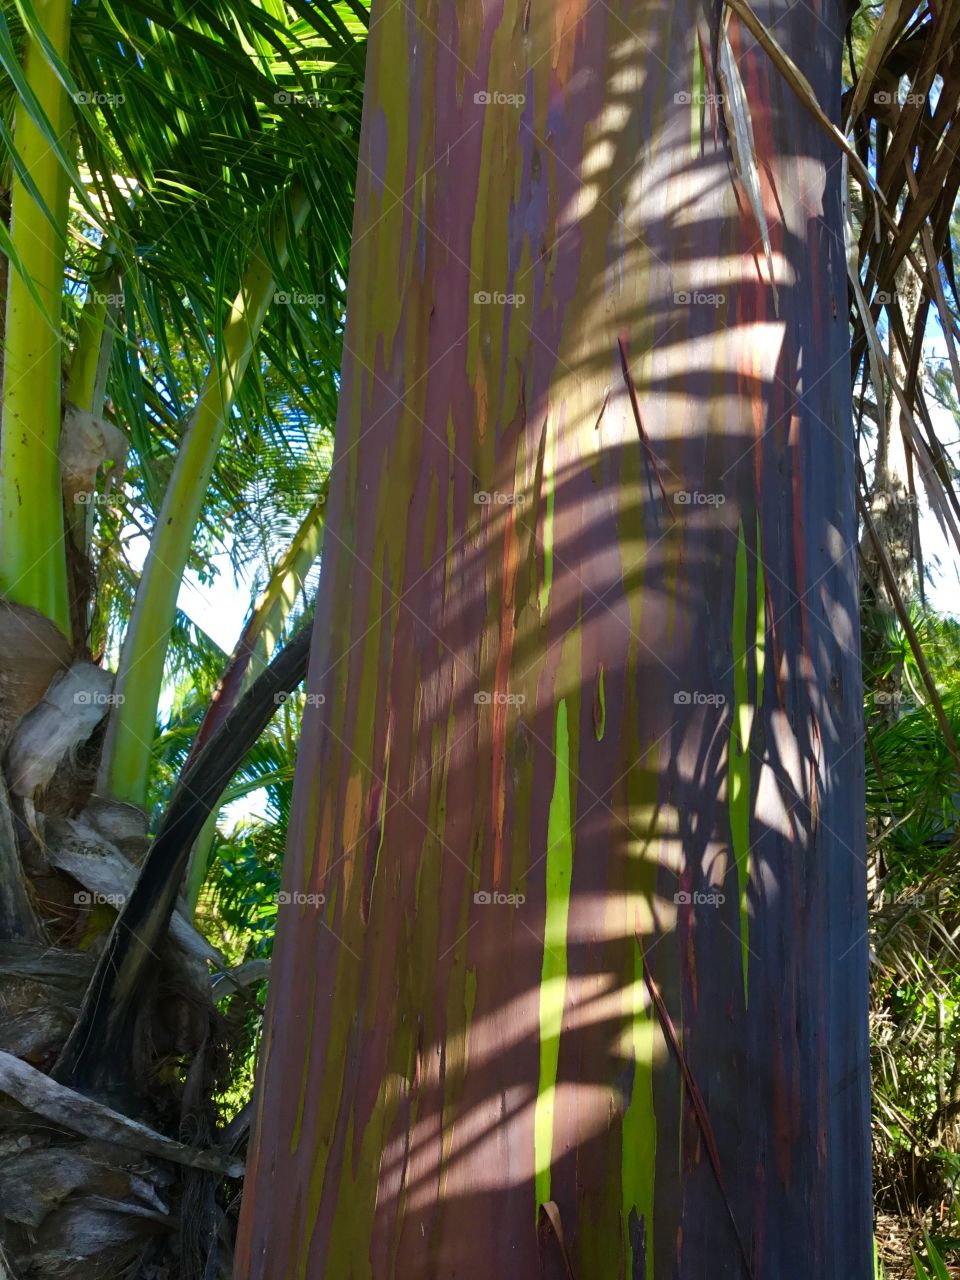 Rainbow eucalyptus tree - beautiful!